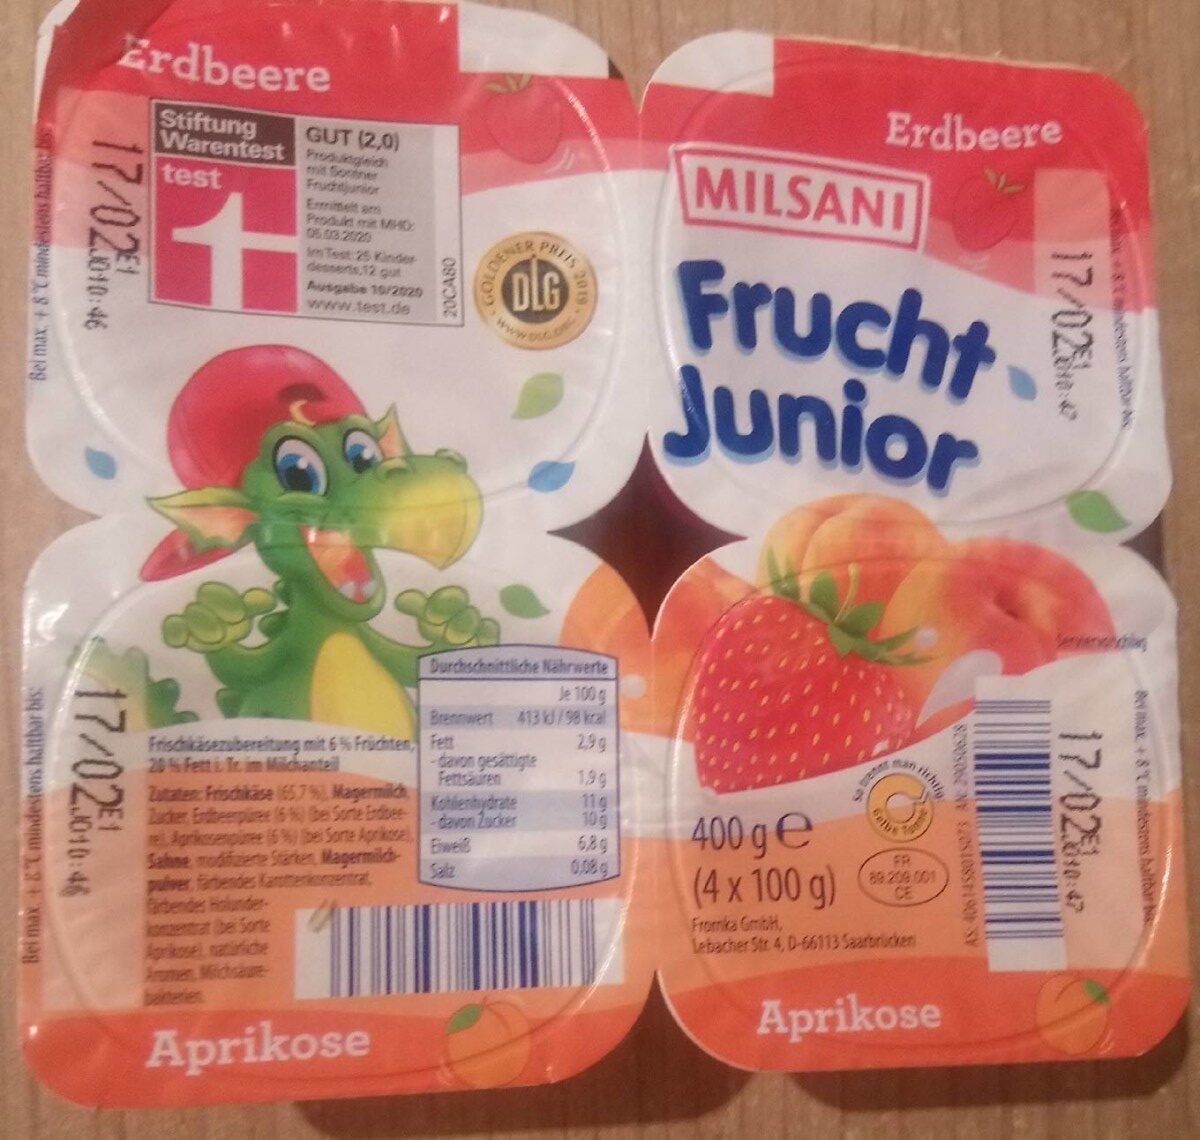 Frucht-Junior - Erdbeere / Aprikose - Produkt